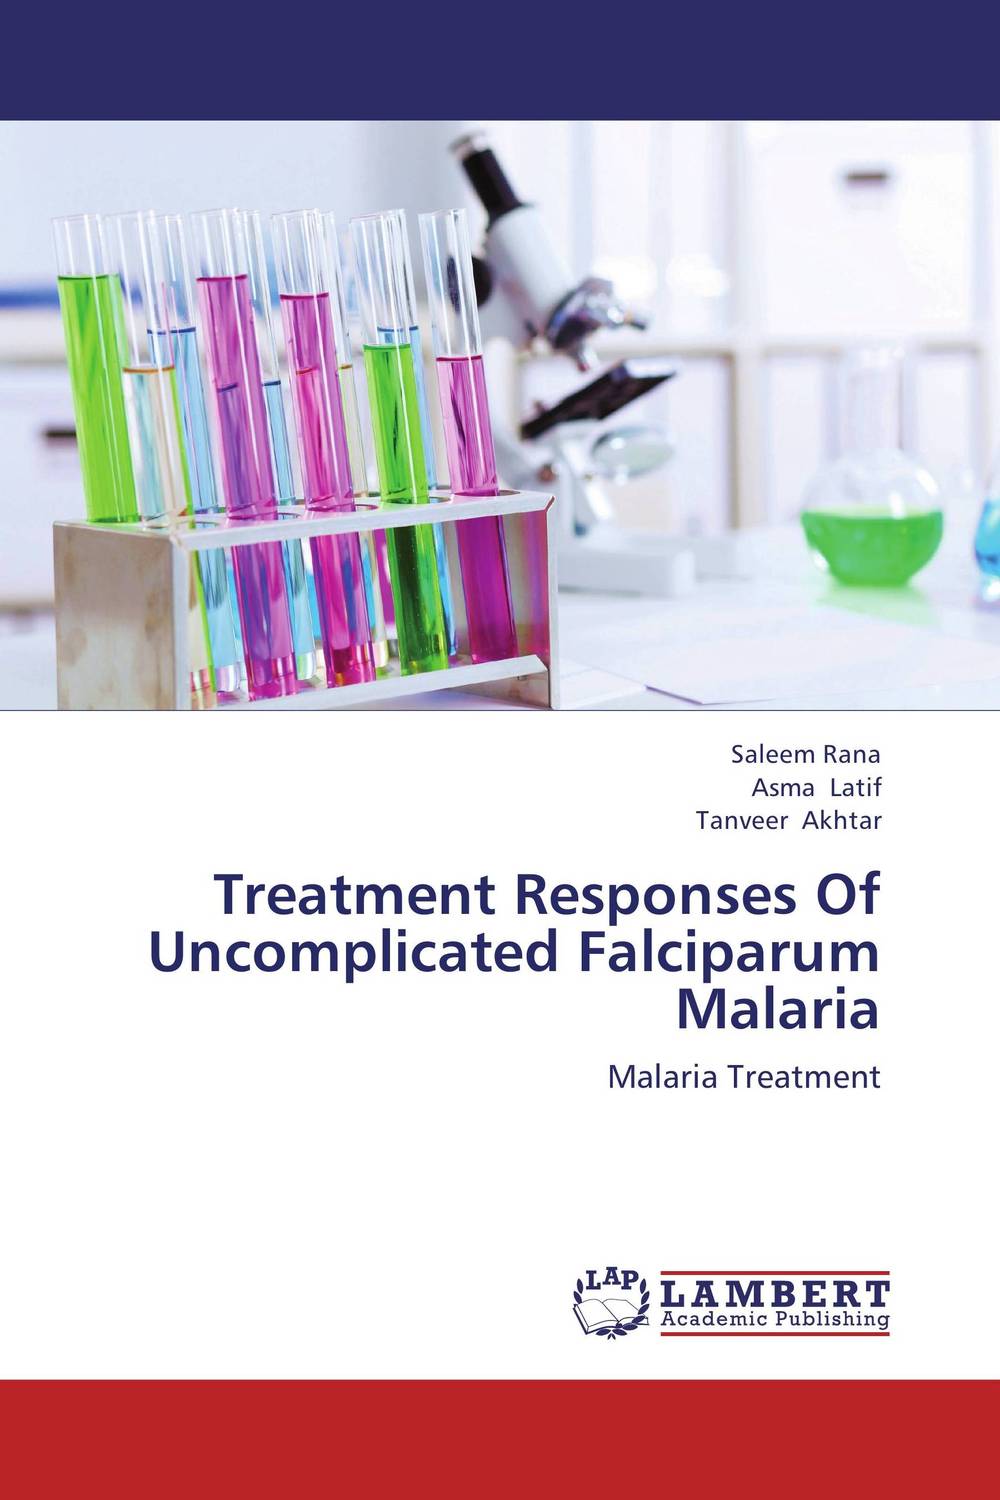 Treatment Responses Of Uncomplicated Falciparum Malaria